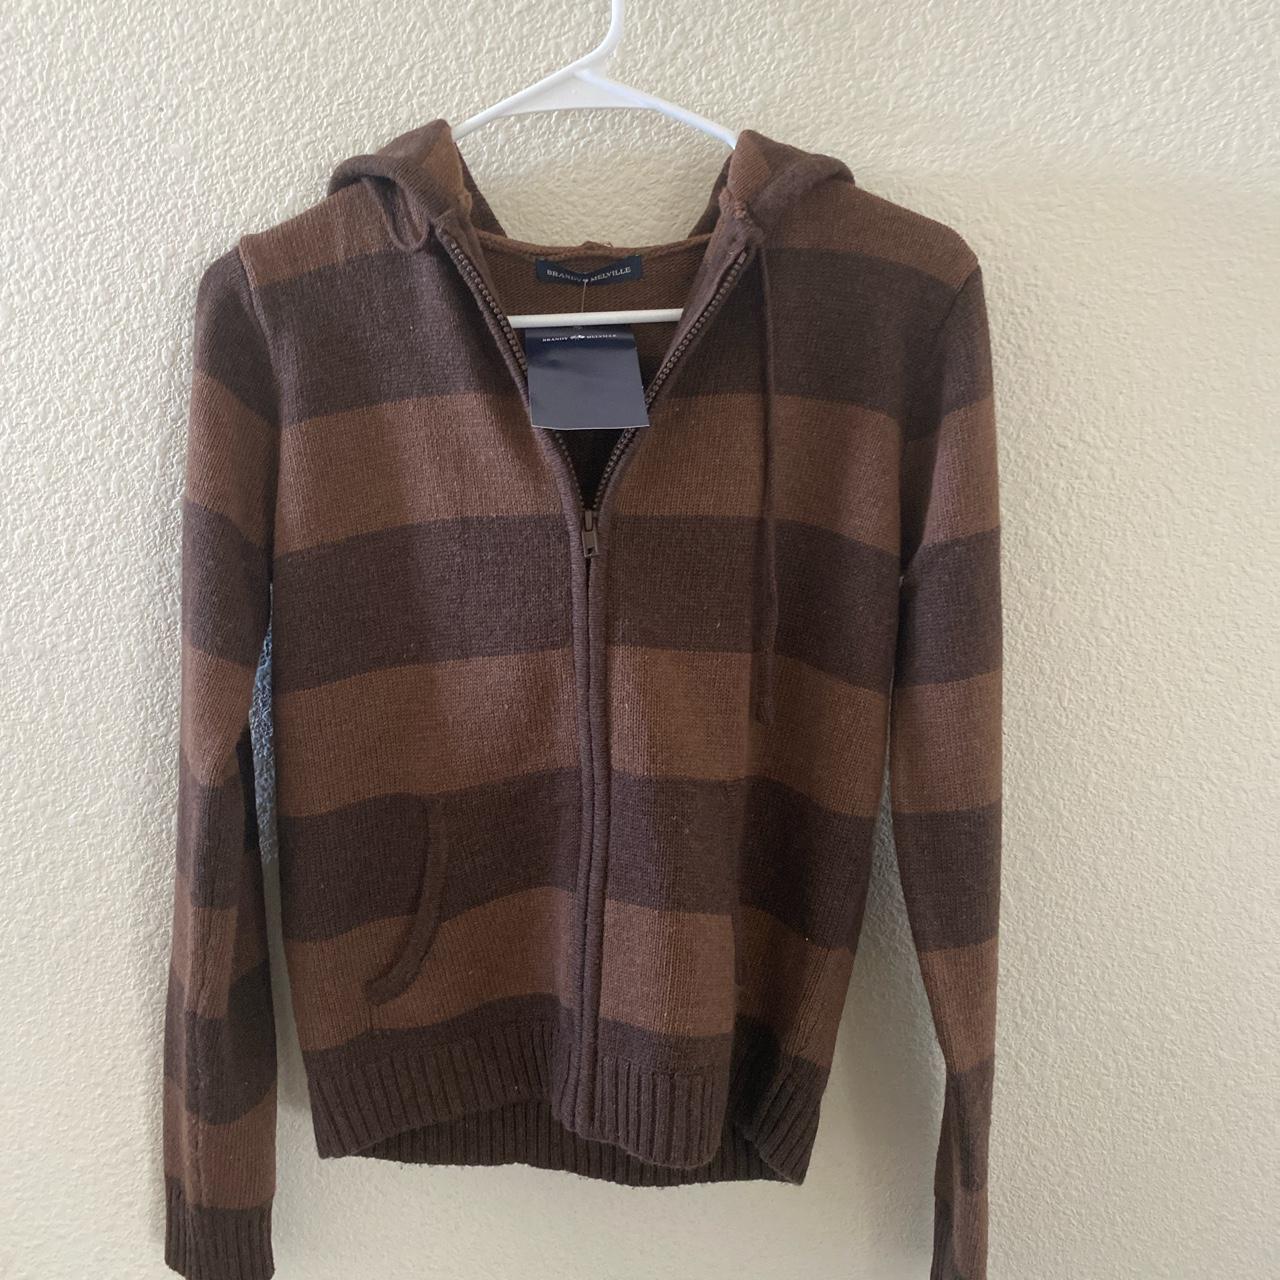 Brandy melville Alana striped zip up sweater - Depop